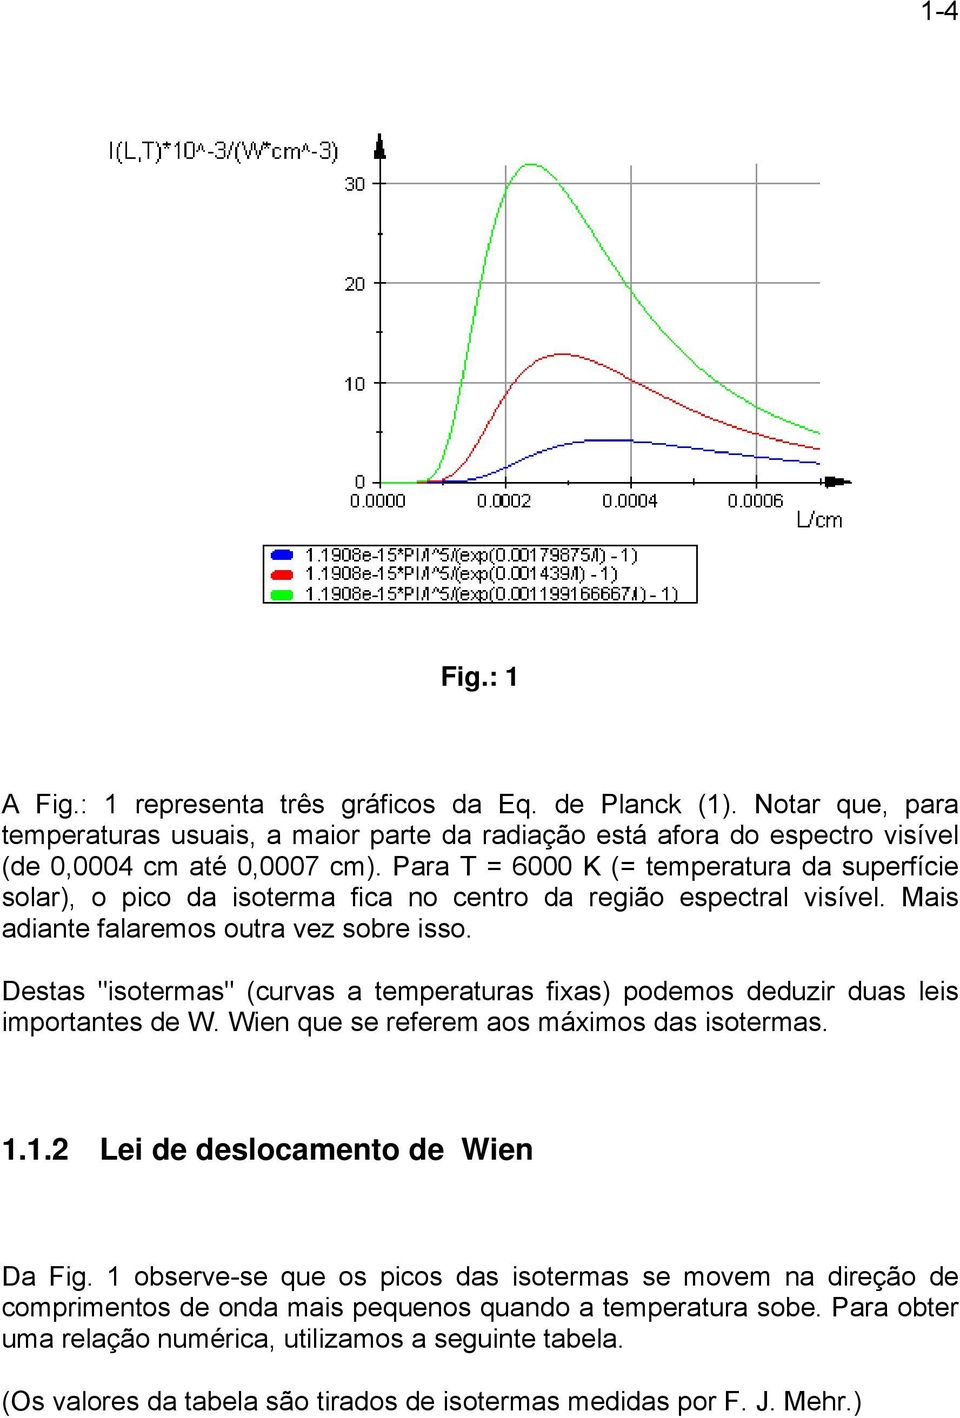 Destas "isotermas" (curvas a temperaturas fixas) podemos deduzir duas leis importantes de W. Wien que se referem aos máximos das isotermas. 1.1.2 Lei de deslocamento de Wien Da Fig.